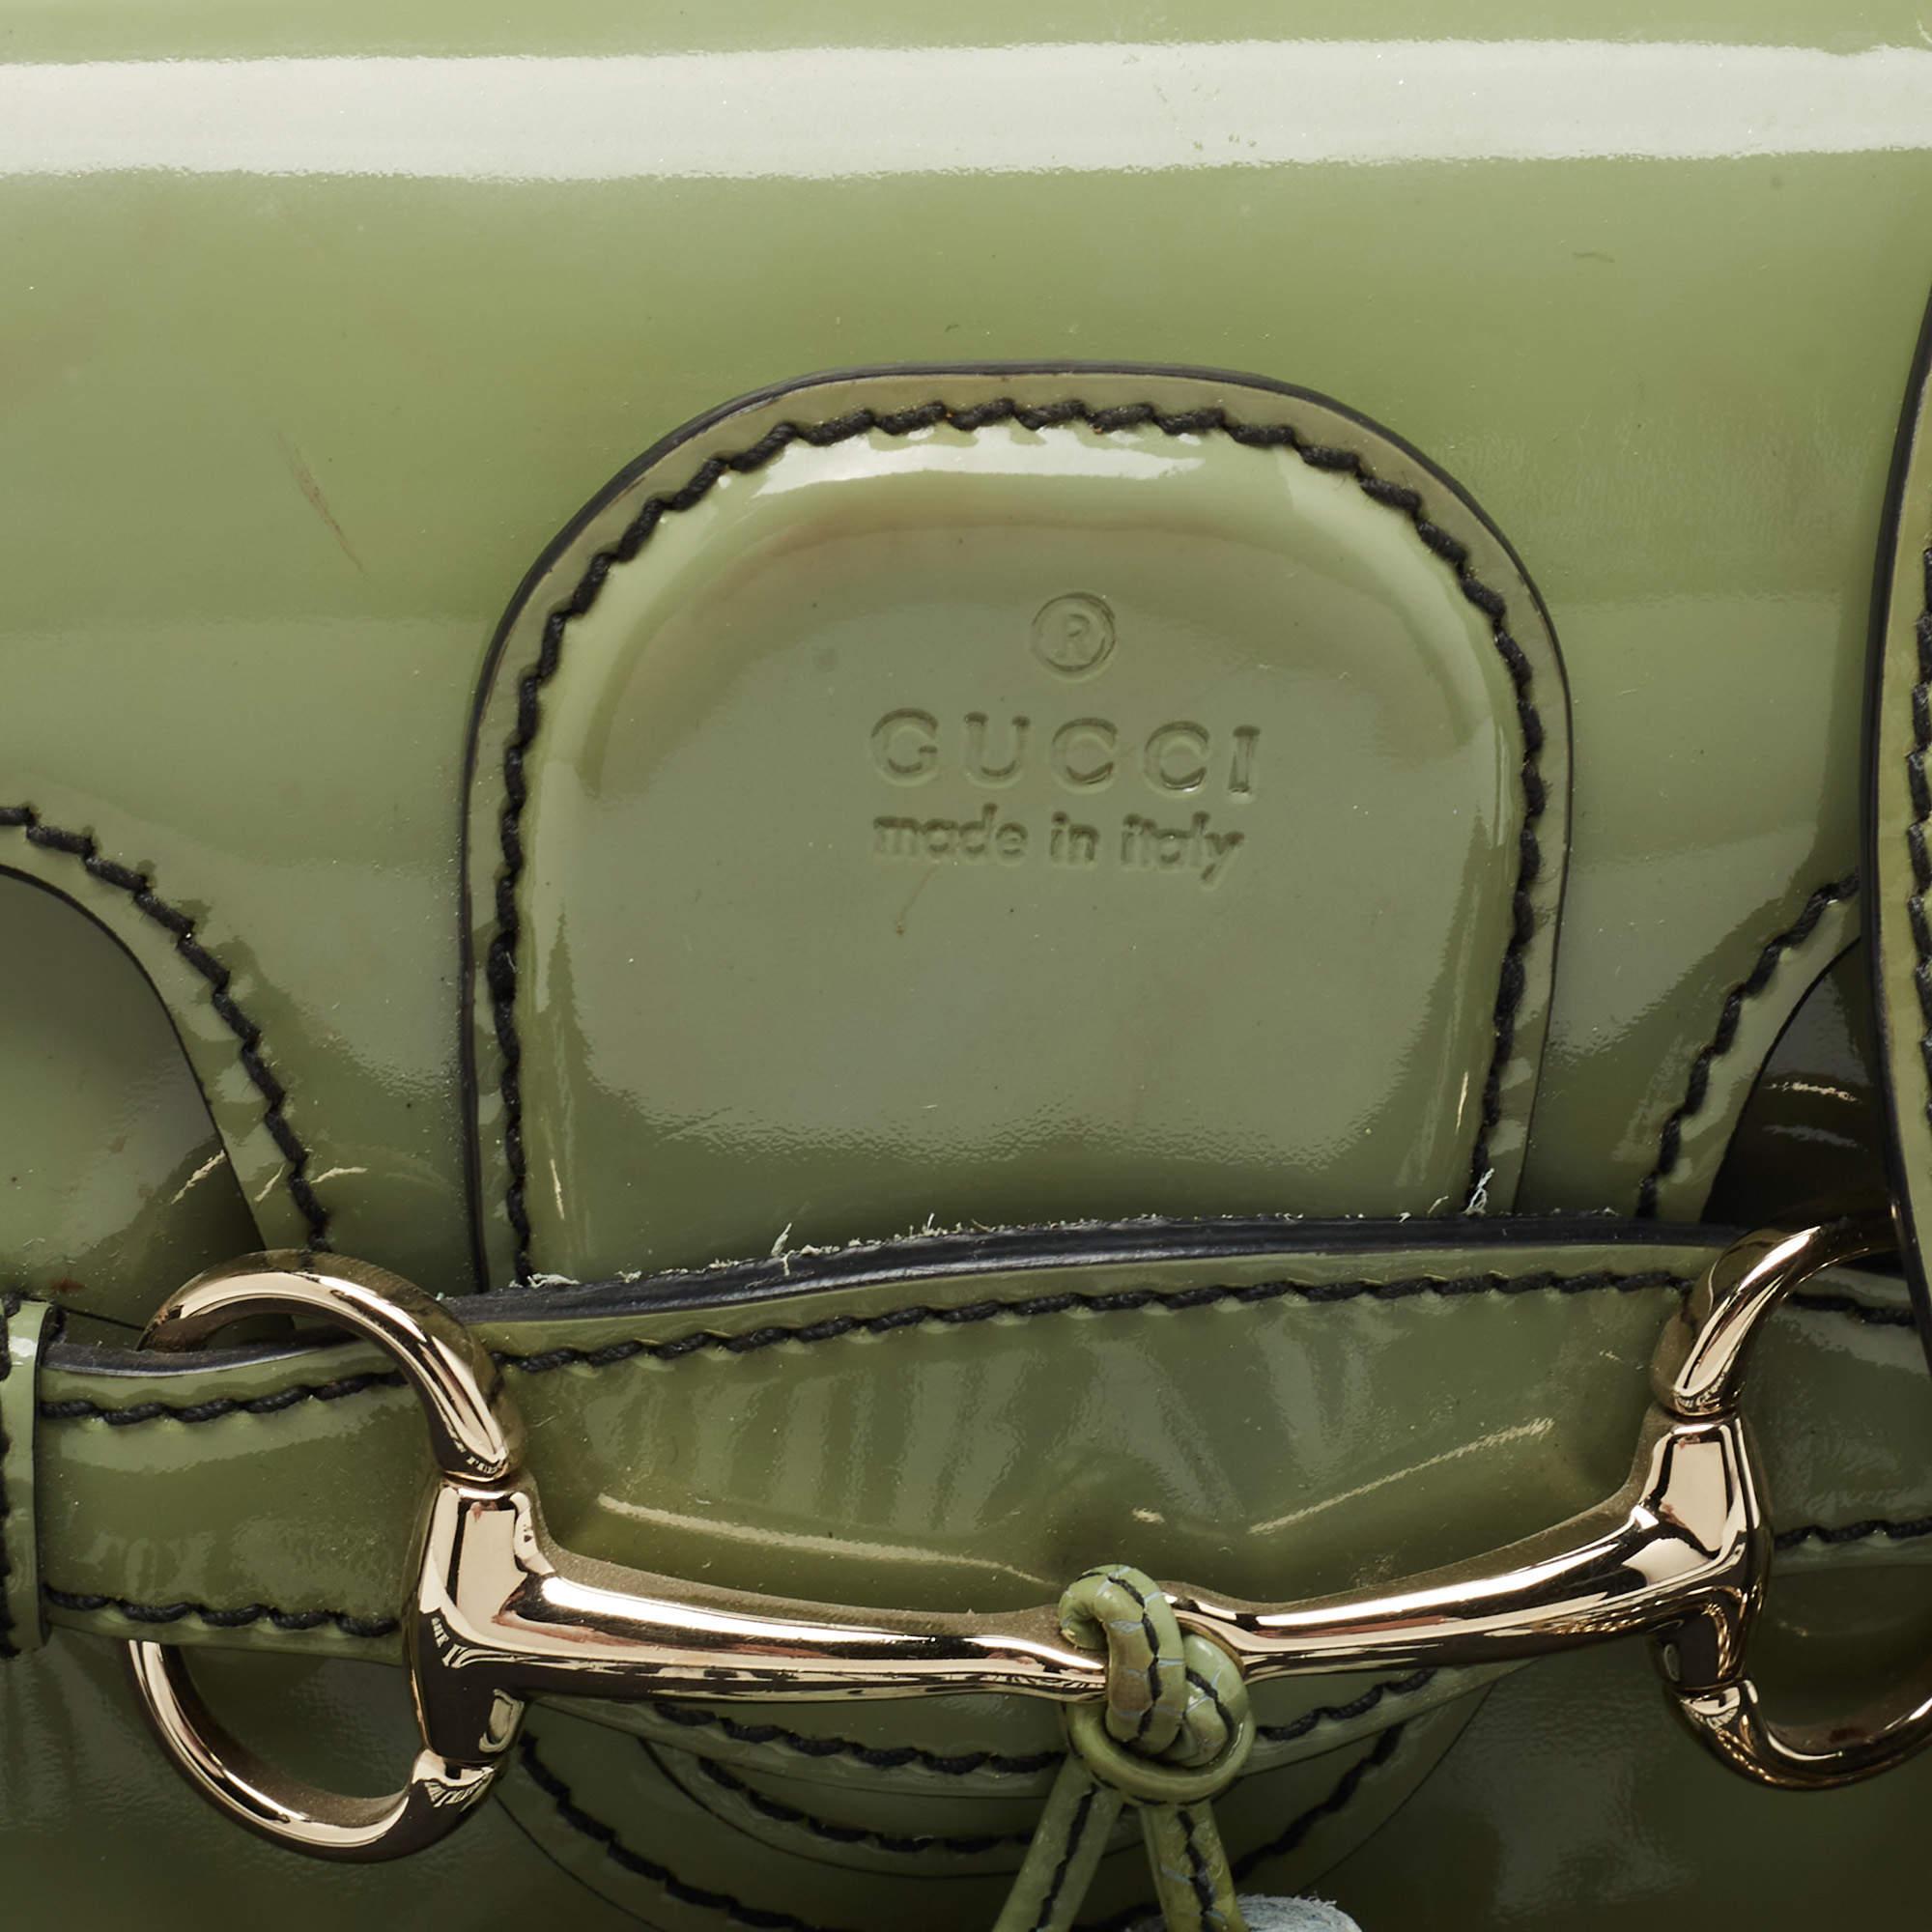 Gucci Light Green Patent Leather Emily Shoulder Bag 2